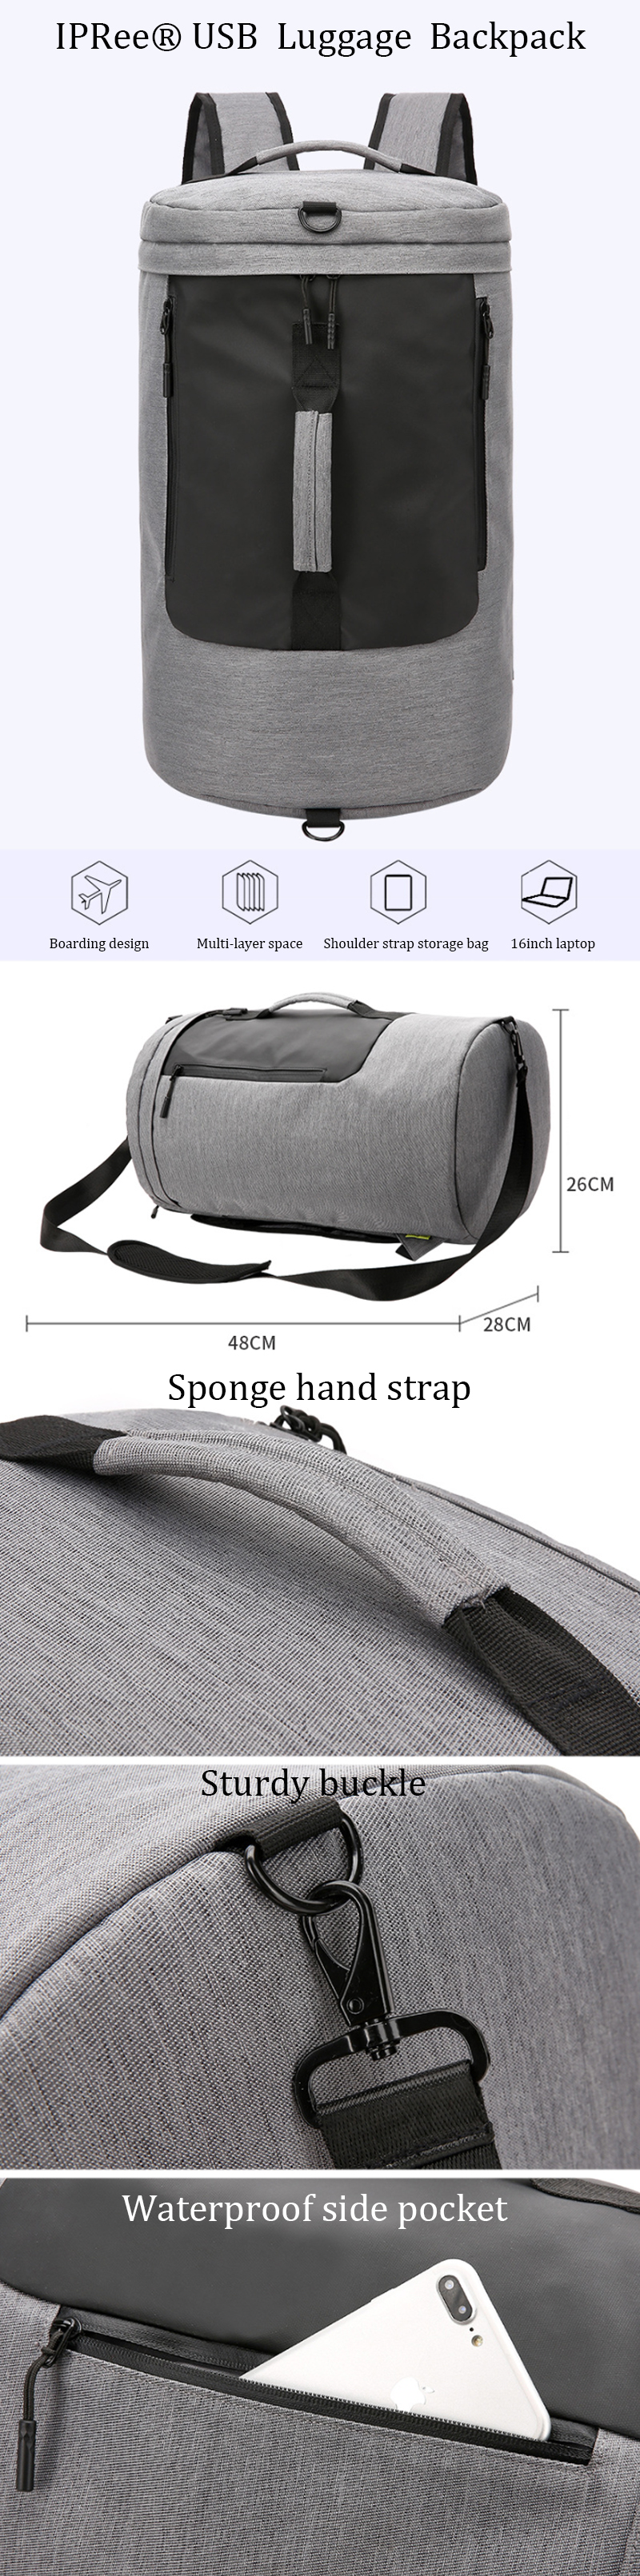 IPReereg-35L-Canvas-USB-Backpack-Outdoor-Travel-Shoulder-Bag-Waterproof-Portable-Luggage-Handbag-1373576-1